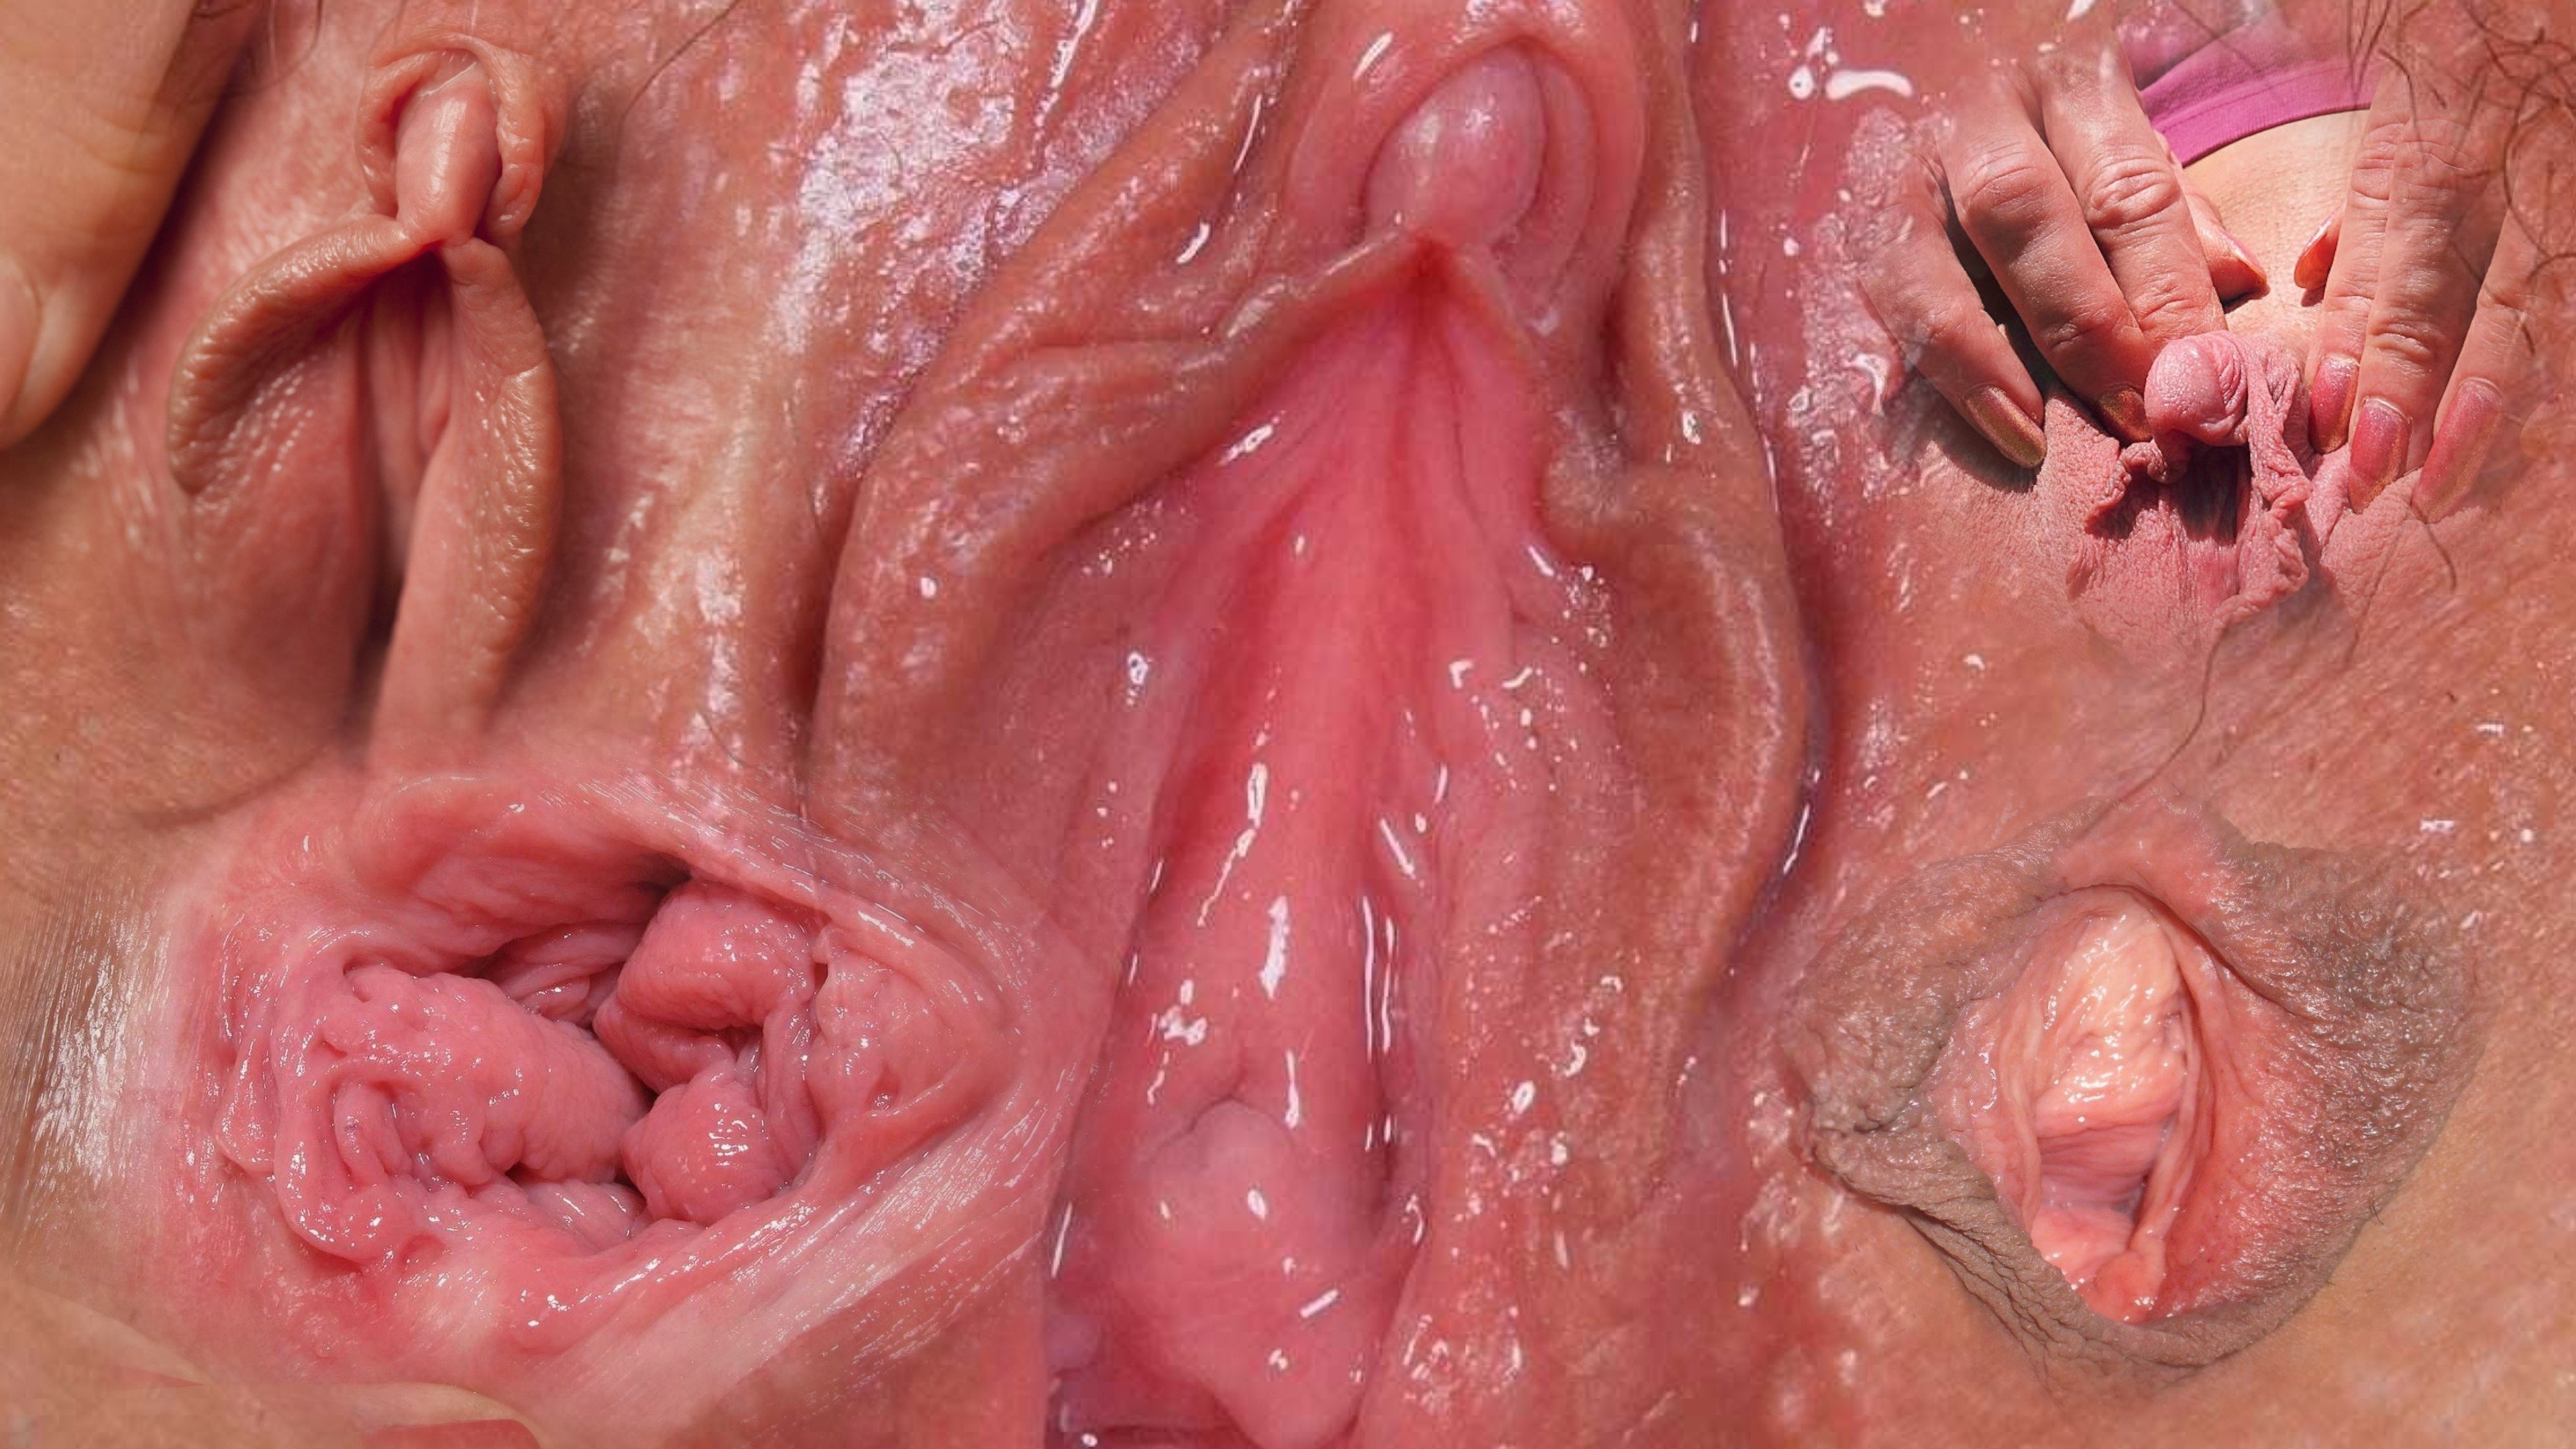 https://eropic.cc/uploads/posts/2022-06/1654361255_27-eropic-cc-p-erotika-kak-viglyadit-seks-iznutri-vagini-43.jpg